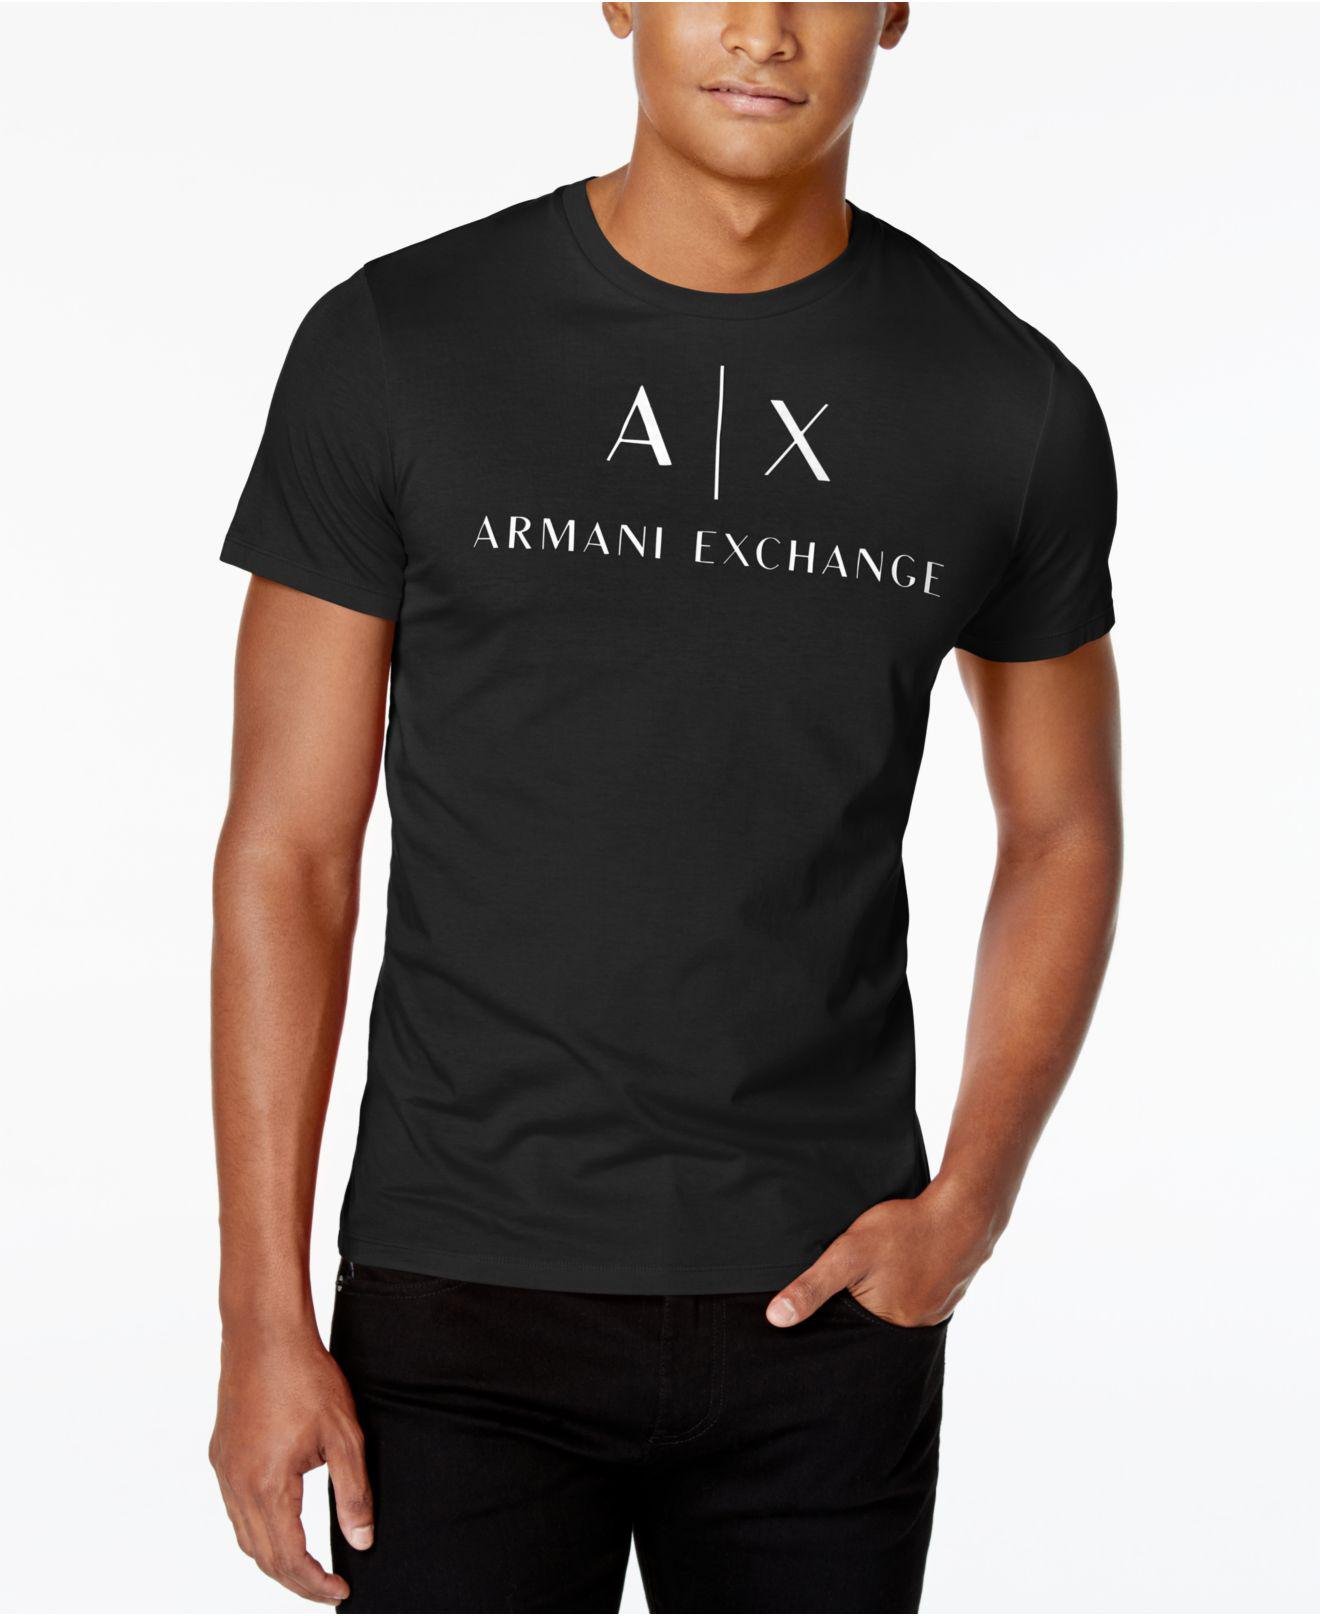 armani t shirts india